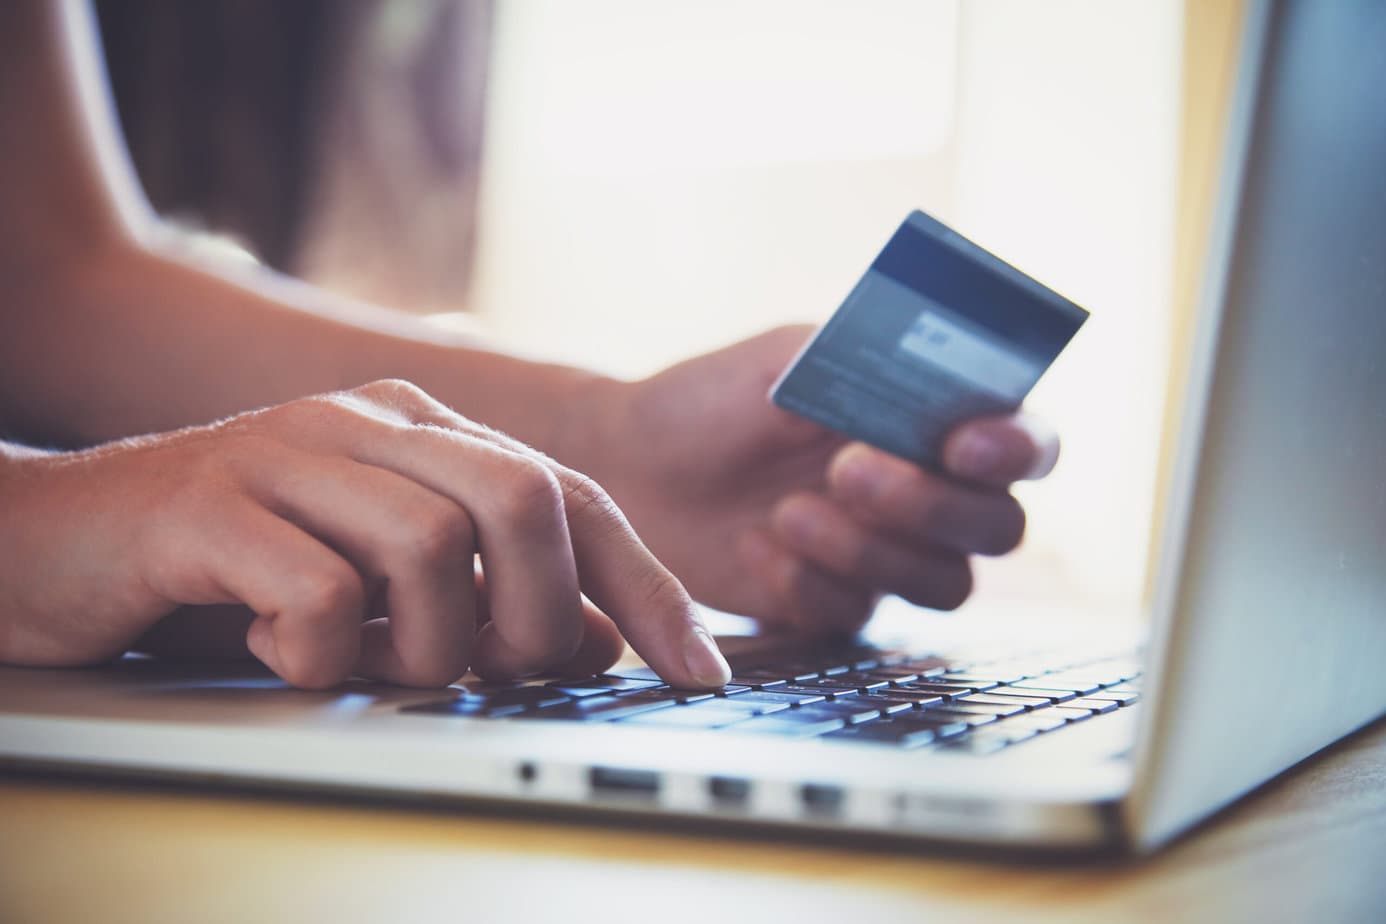 Online gambling credit card ban one step closer 